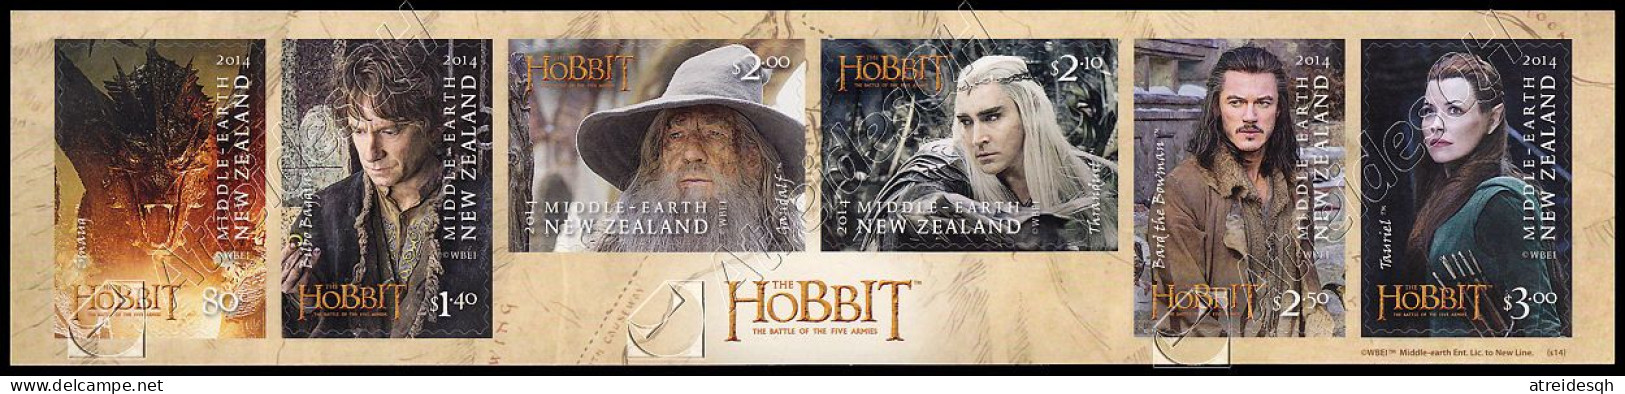 [Q] Nuova Zelanda / New Zealand 2014: Serie Lo Hobbit III Autoadesiva / The Hobbit III Self-adhesive Stamp Set ** - Cinema